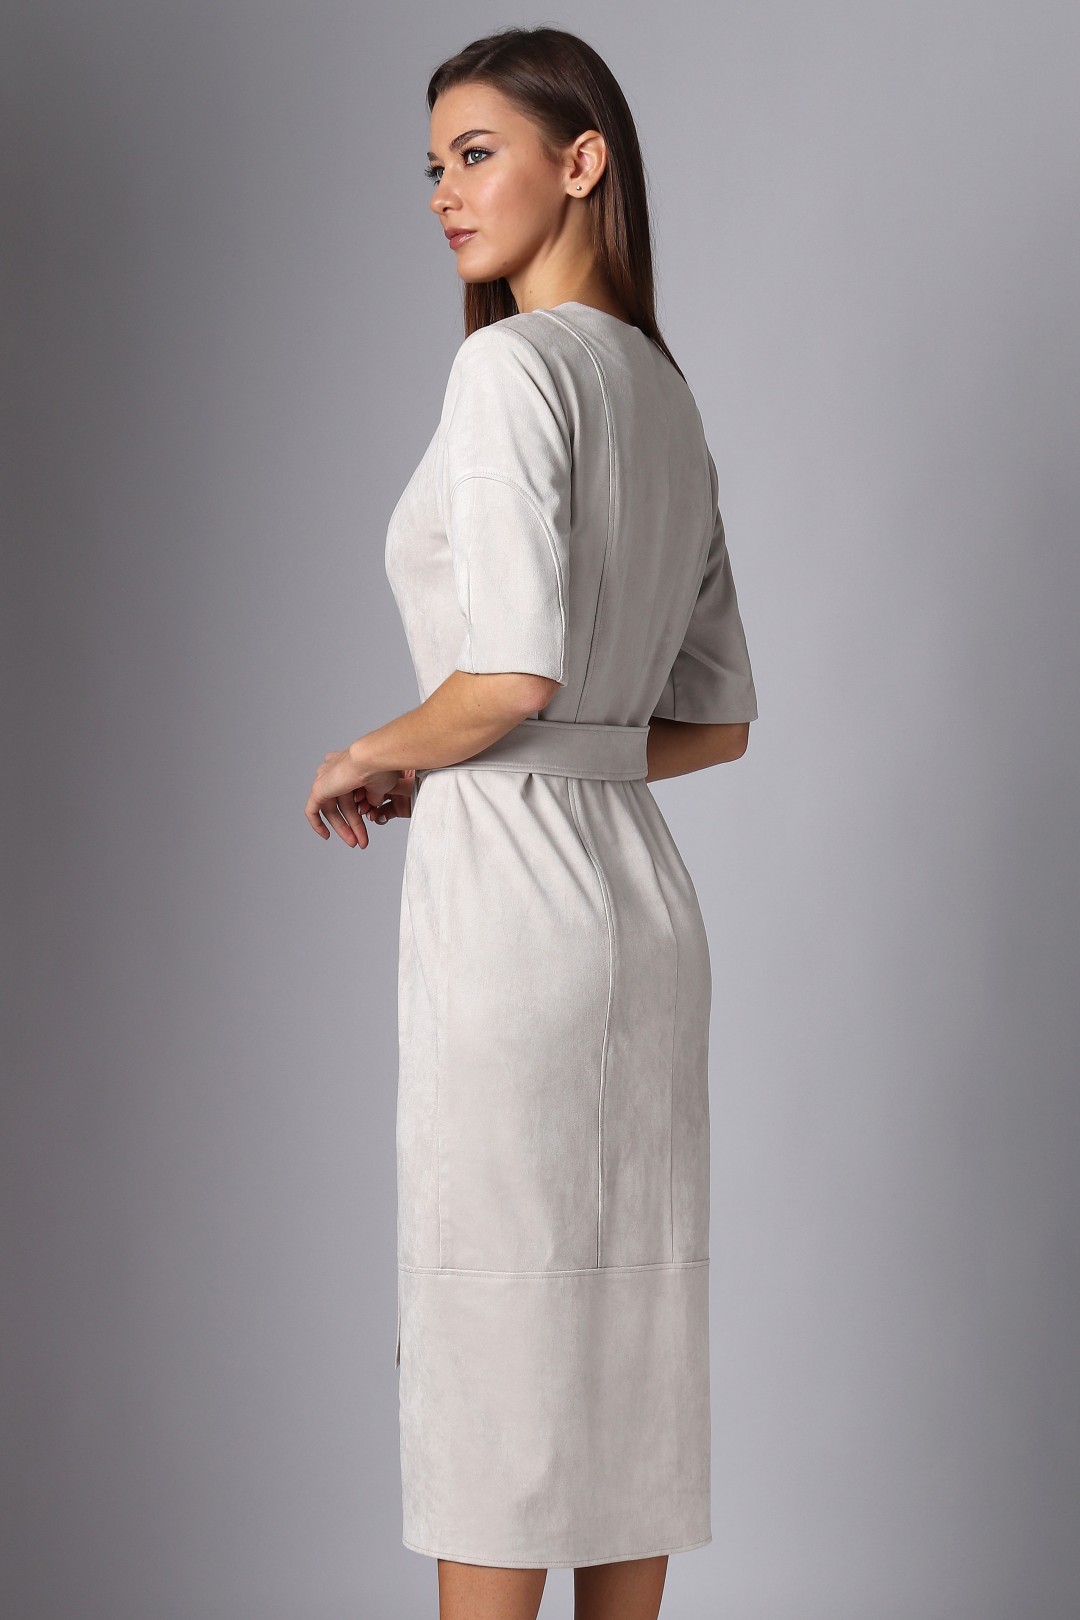 Платье МиА-Мода 1209-1